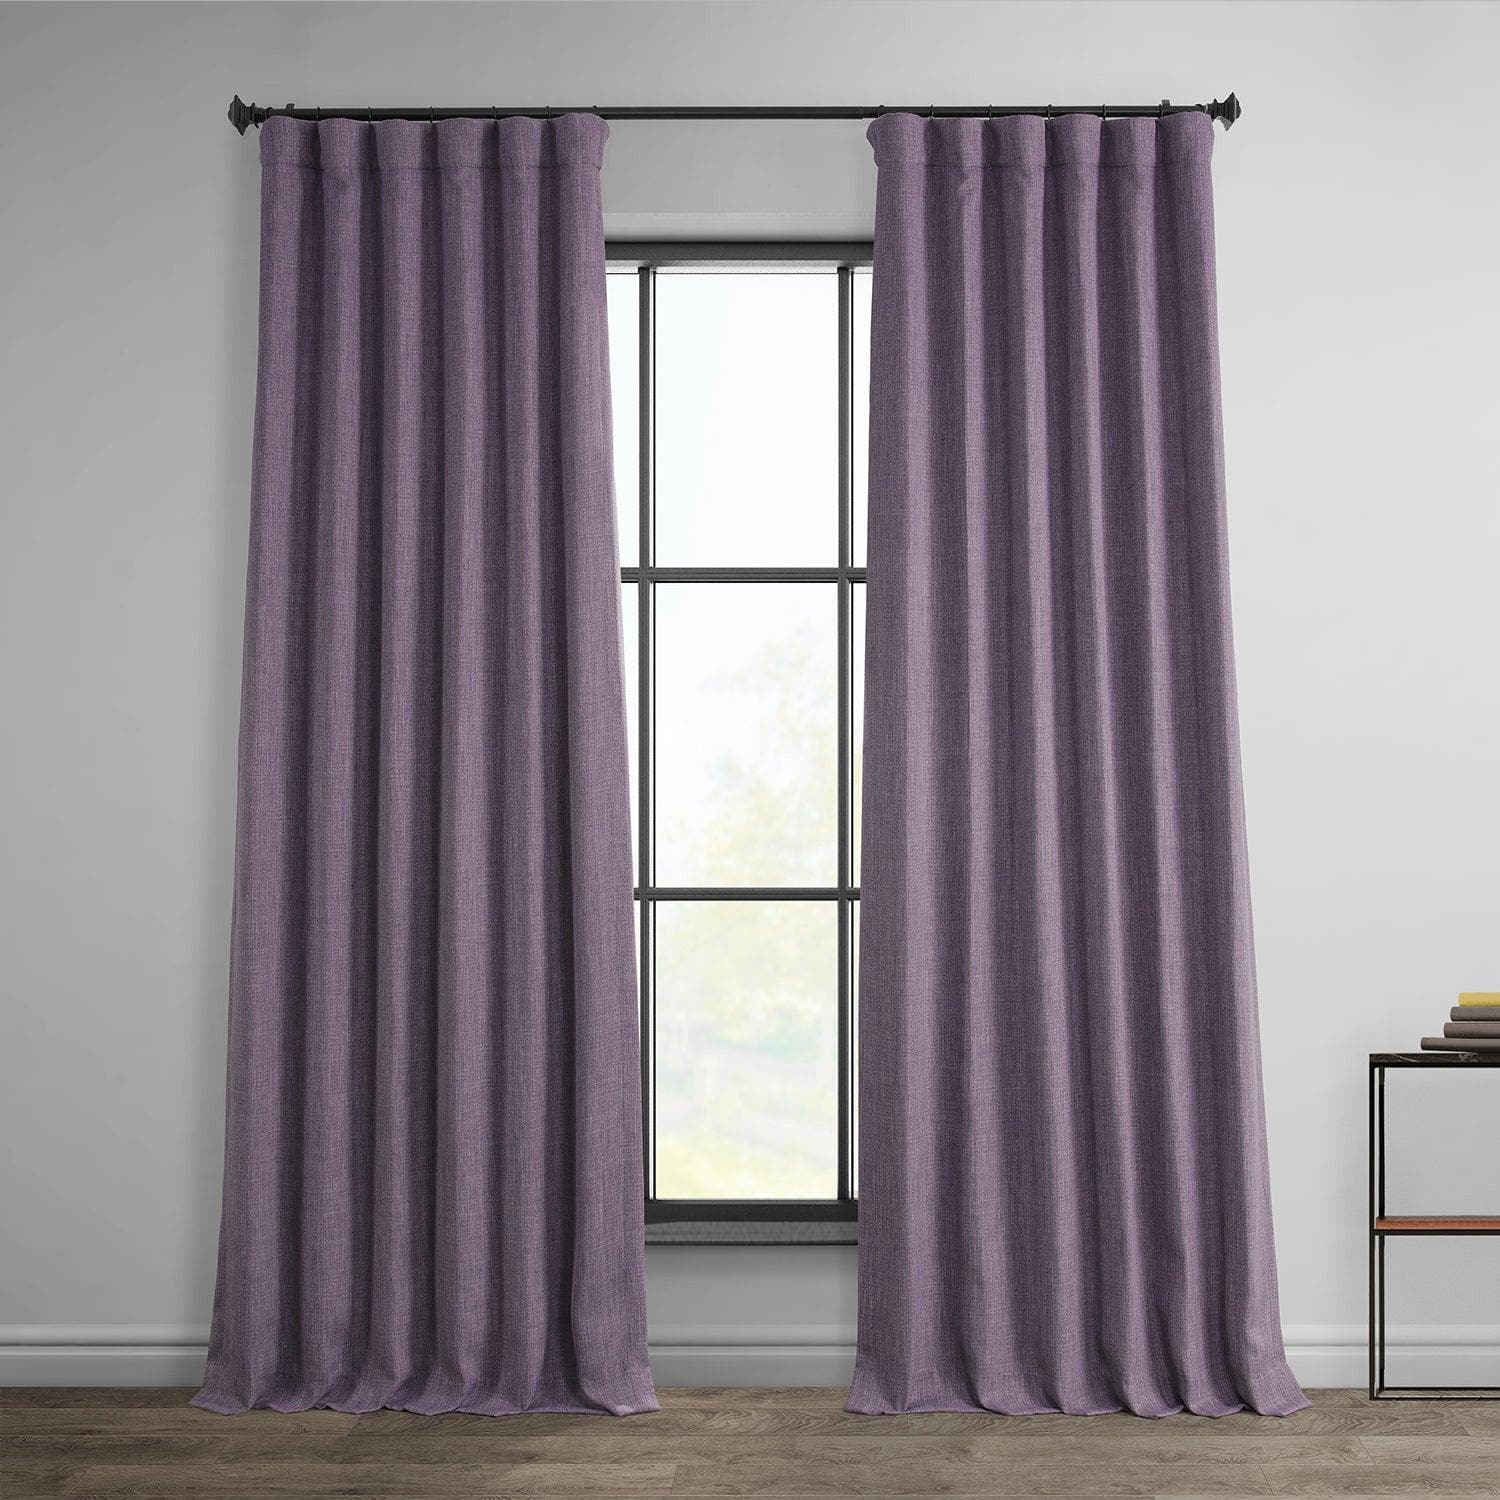 Iris Textured Faux Linen Room Darkening Curtain